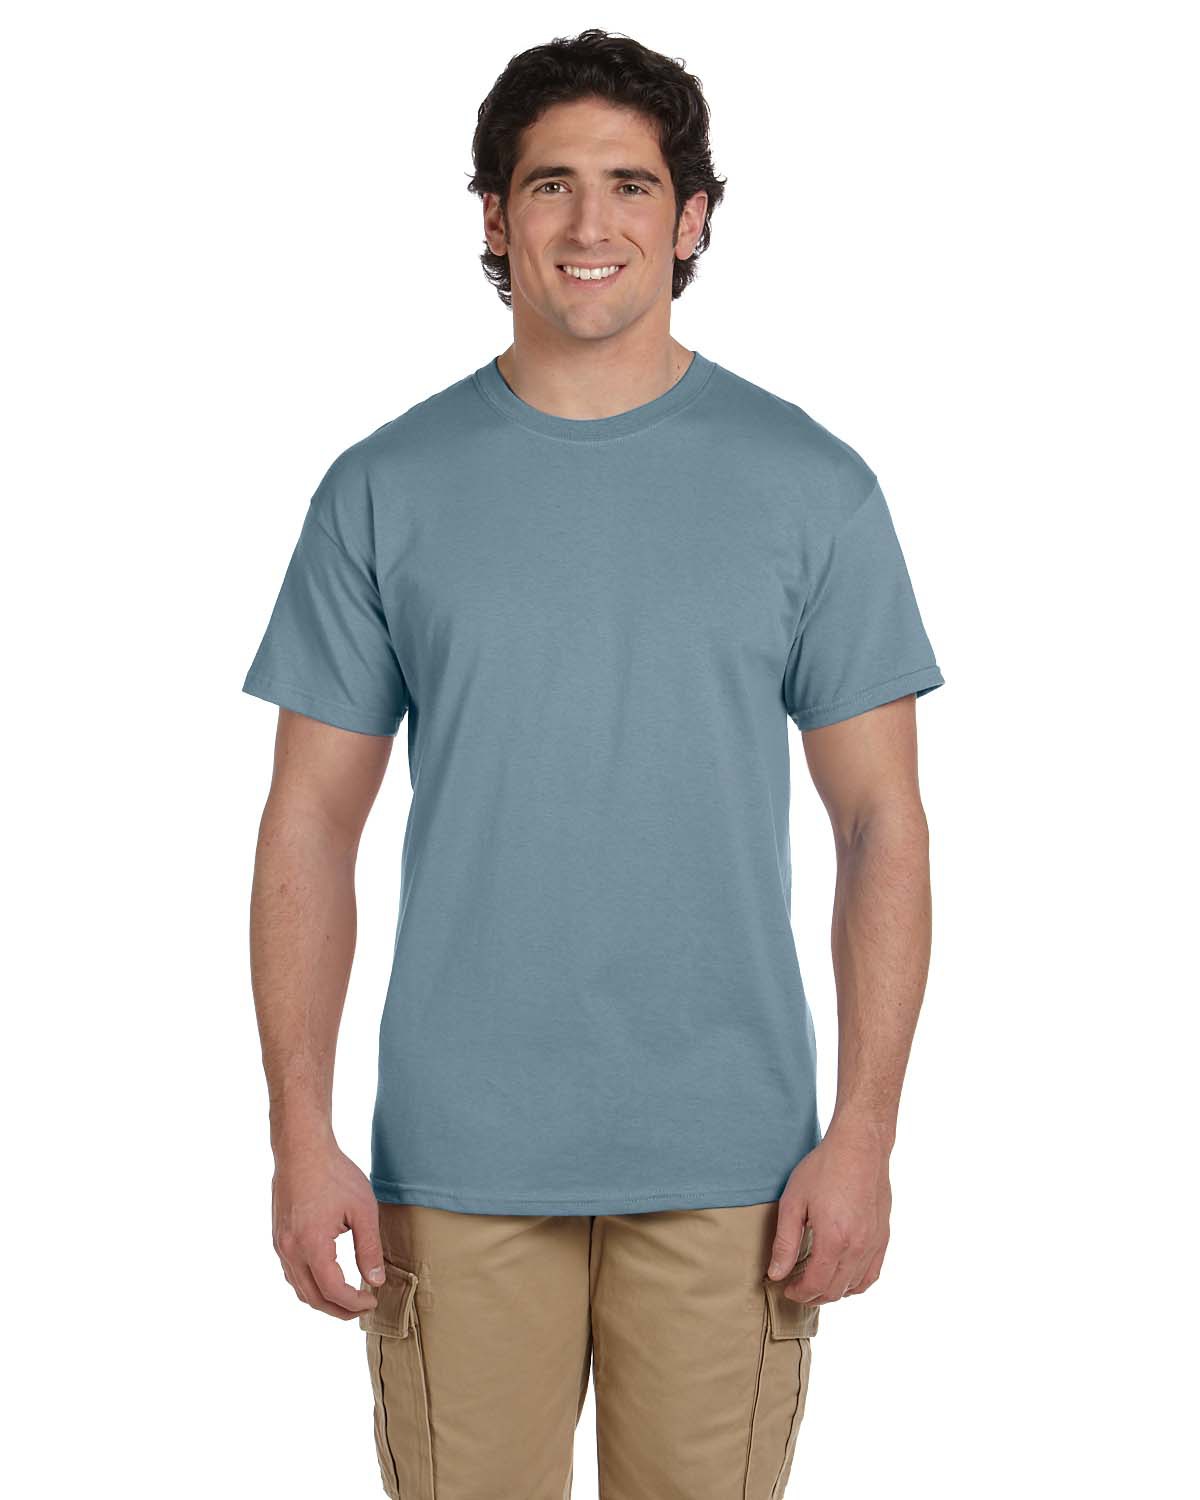 Cotton 6 oz T-Shirt G200 